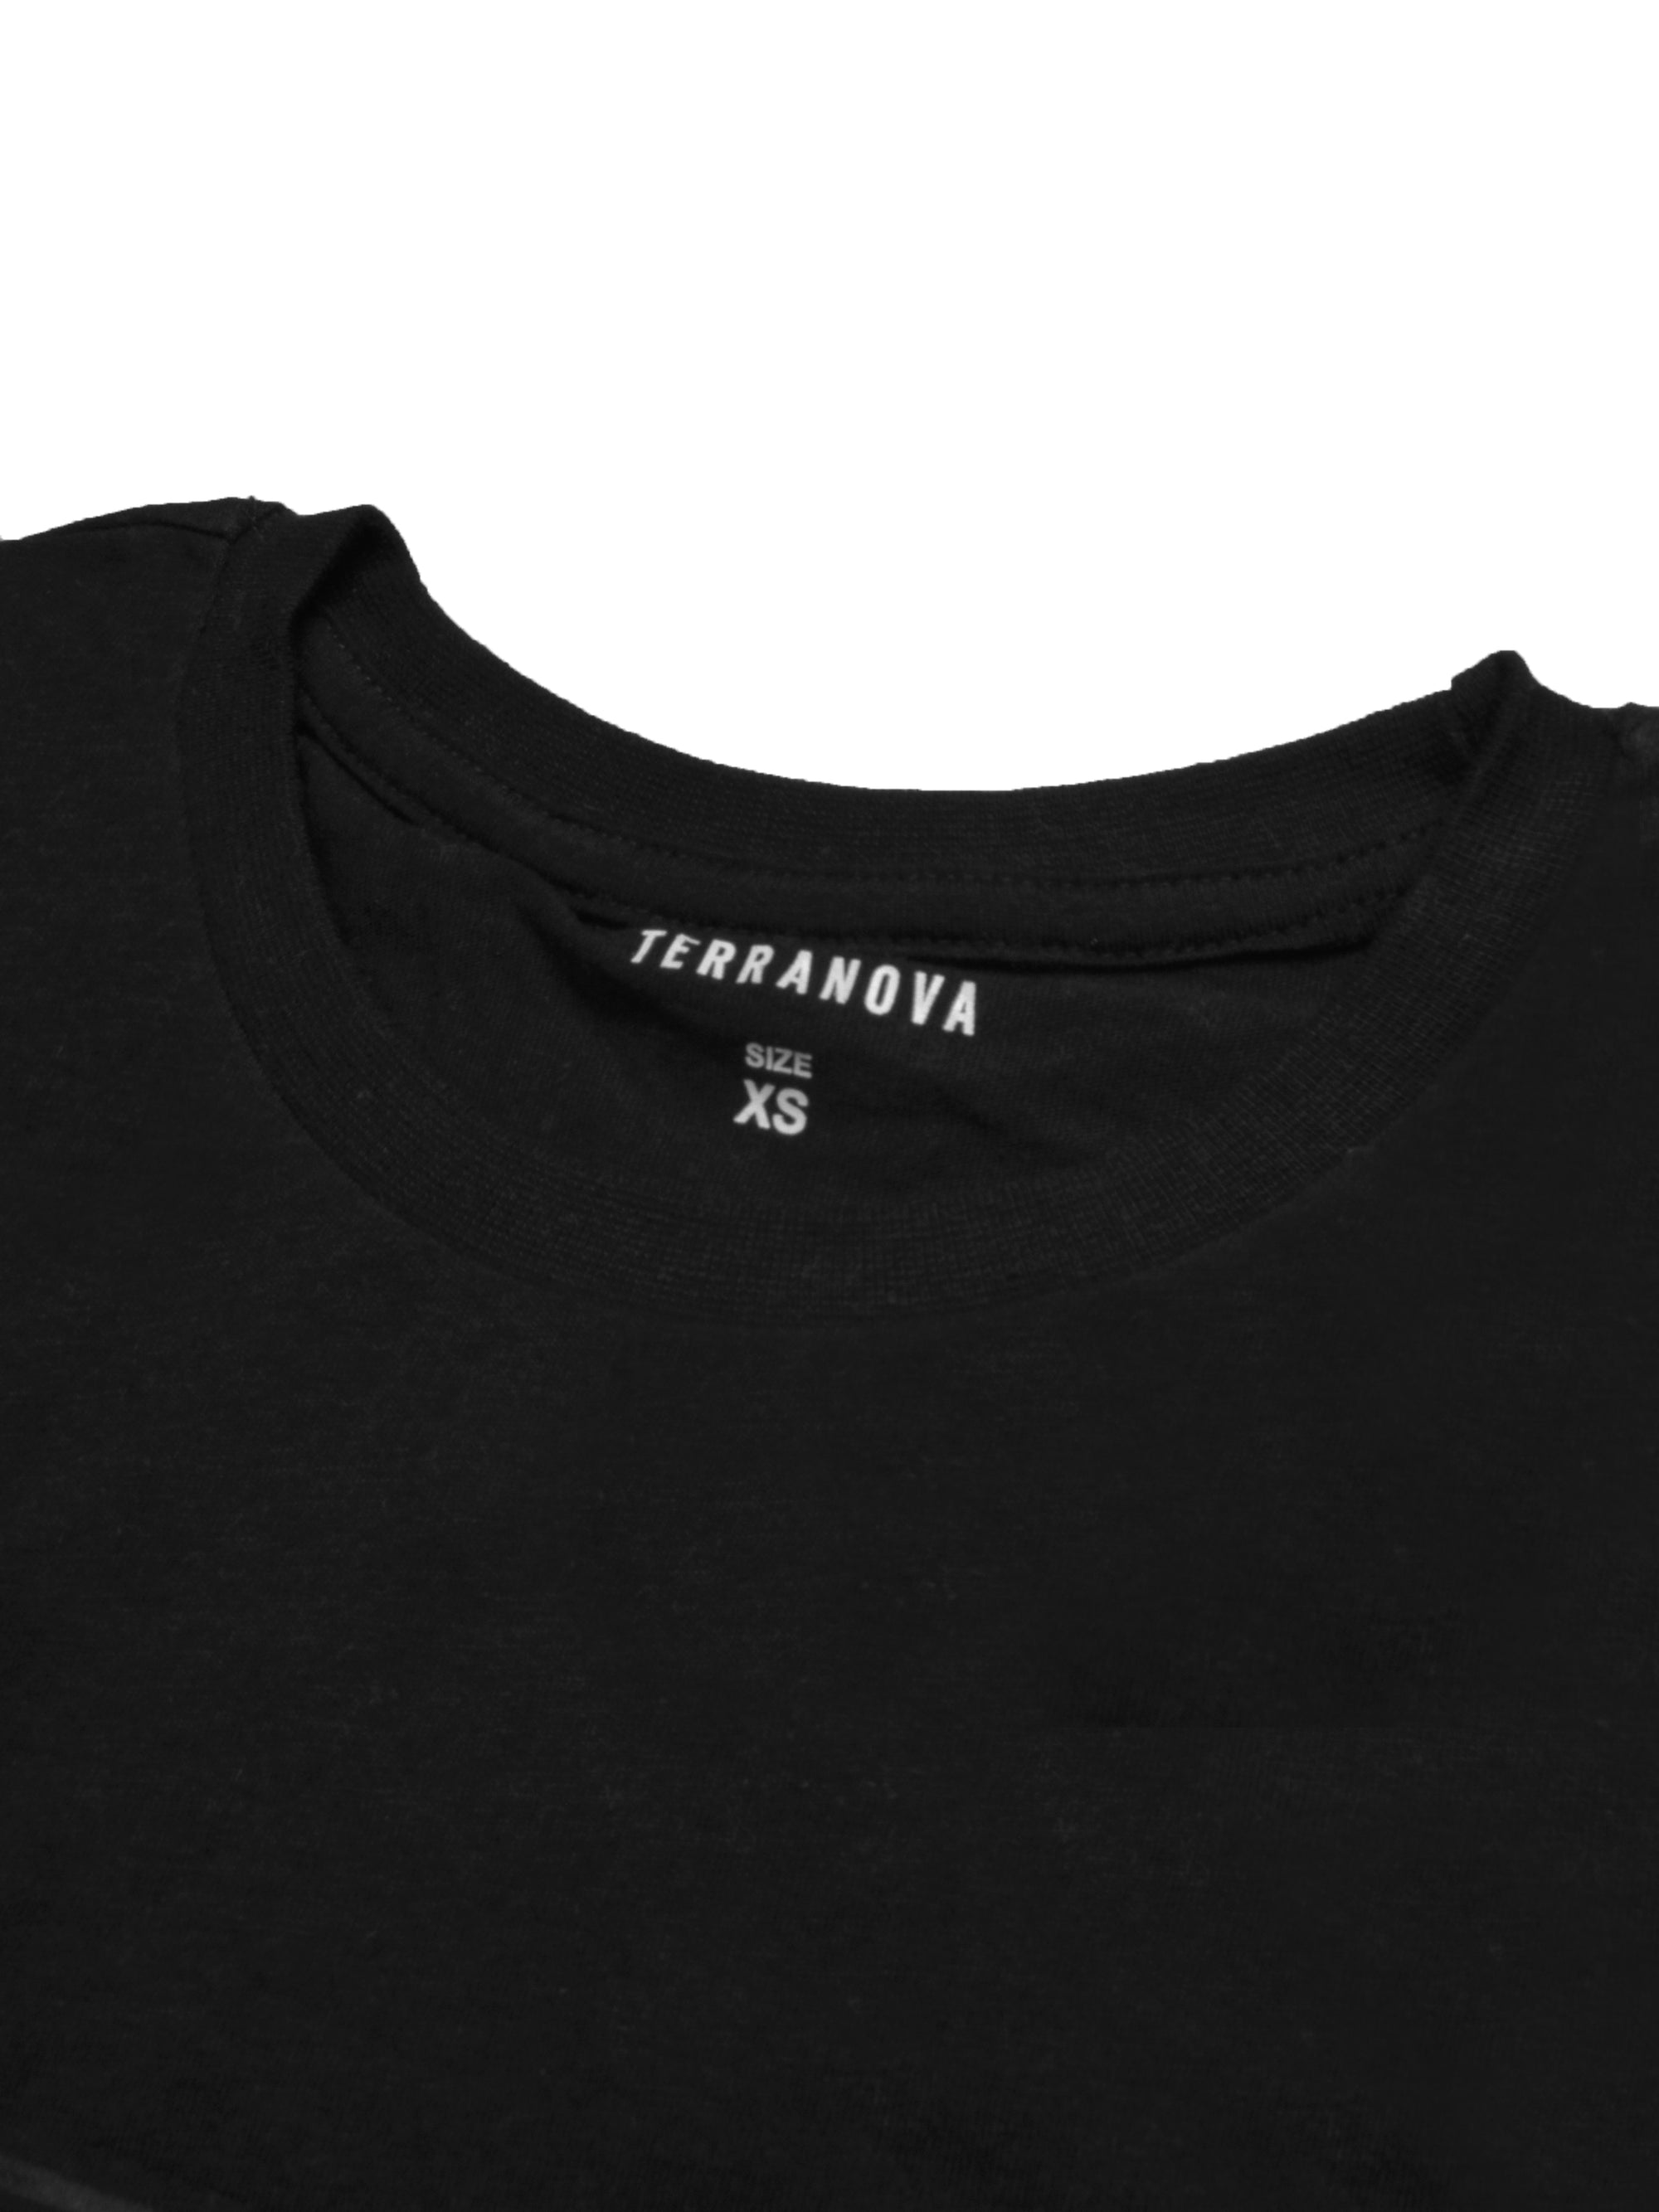 Teranova Crew Neck Summer Tee Shirt For Men-Black-SP1933